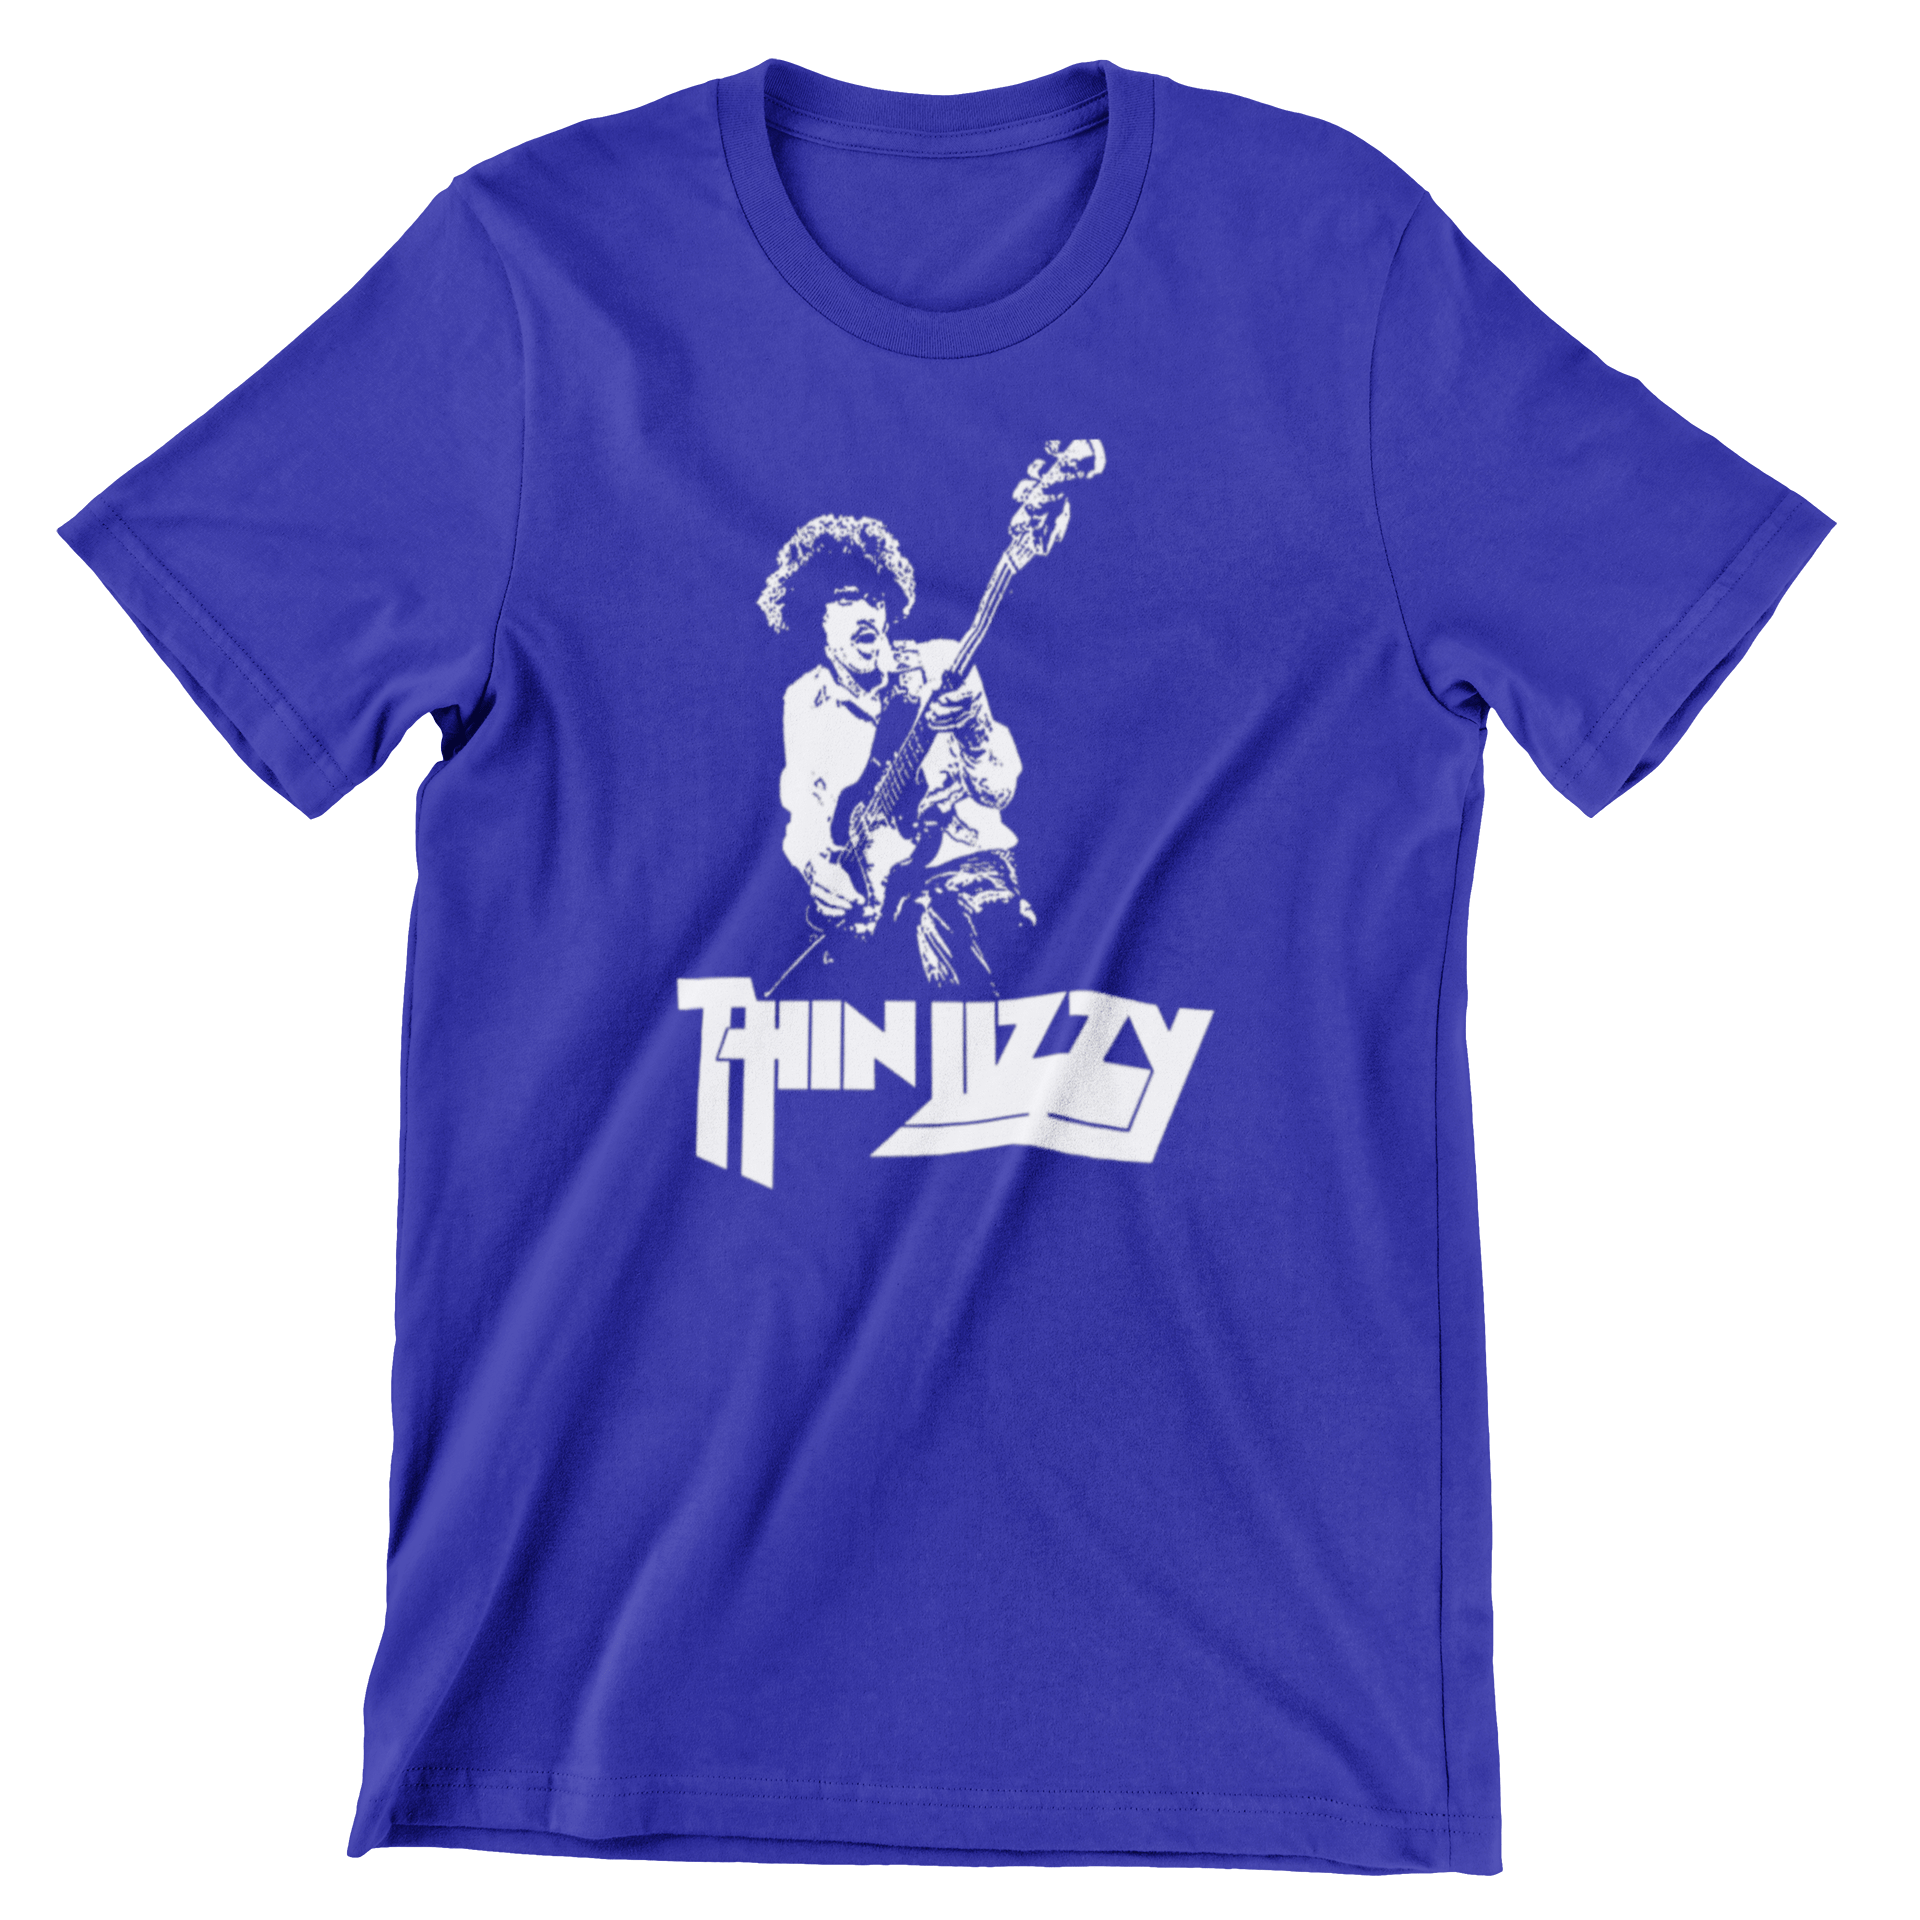 Thin Lizzy T Shirt Phil Lynott Brian Downey Ireland / Guitar / Drums / Jailbreak T-Shirts Rockvieetees